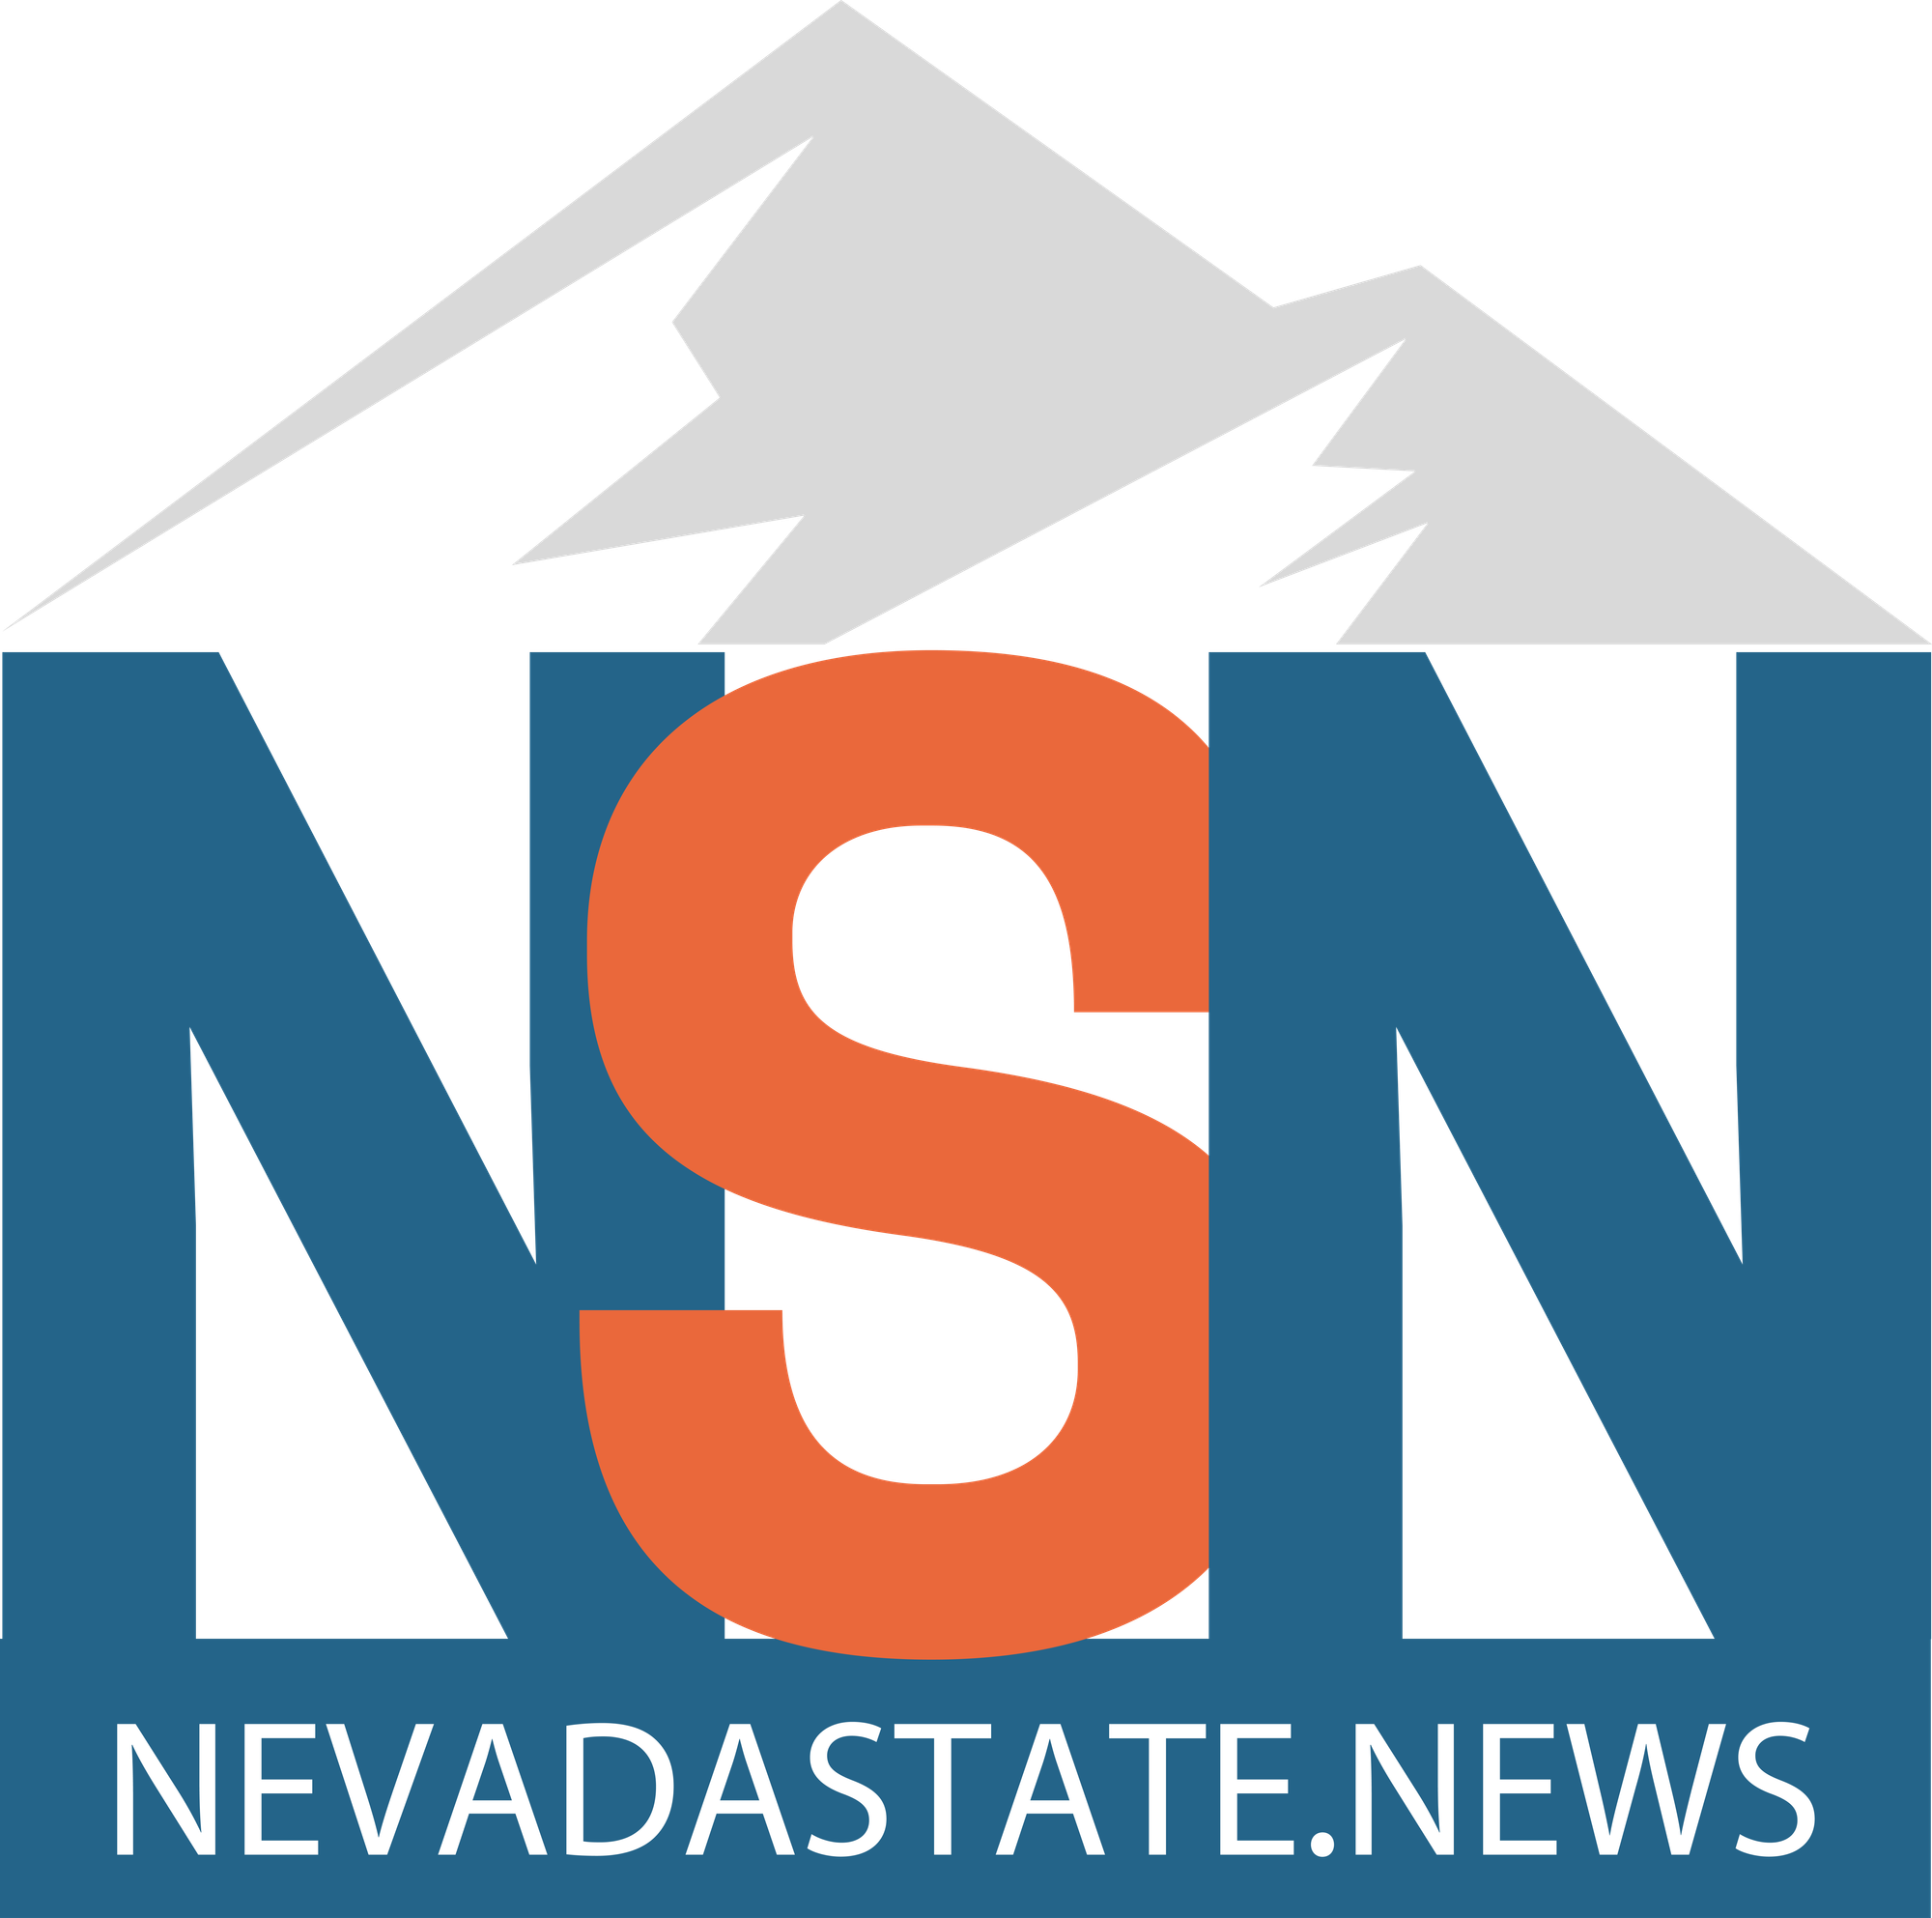 Nevada State News